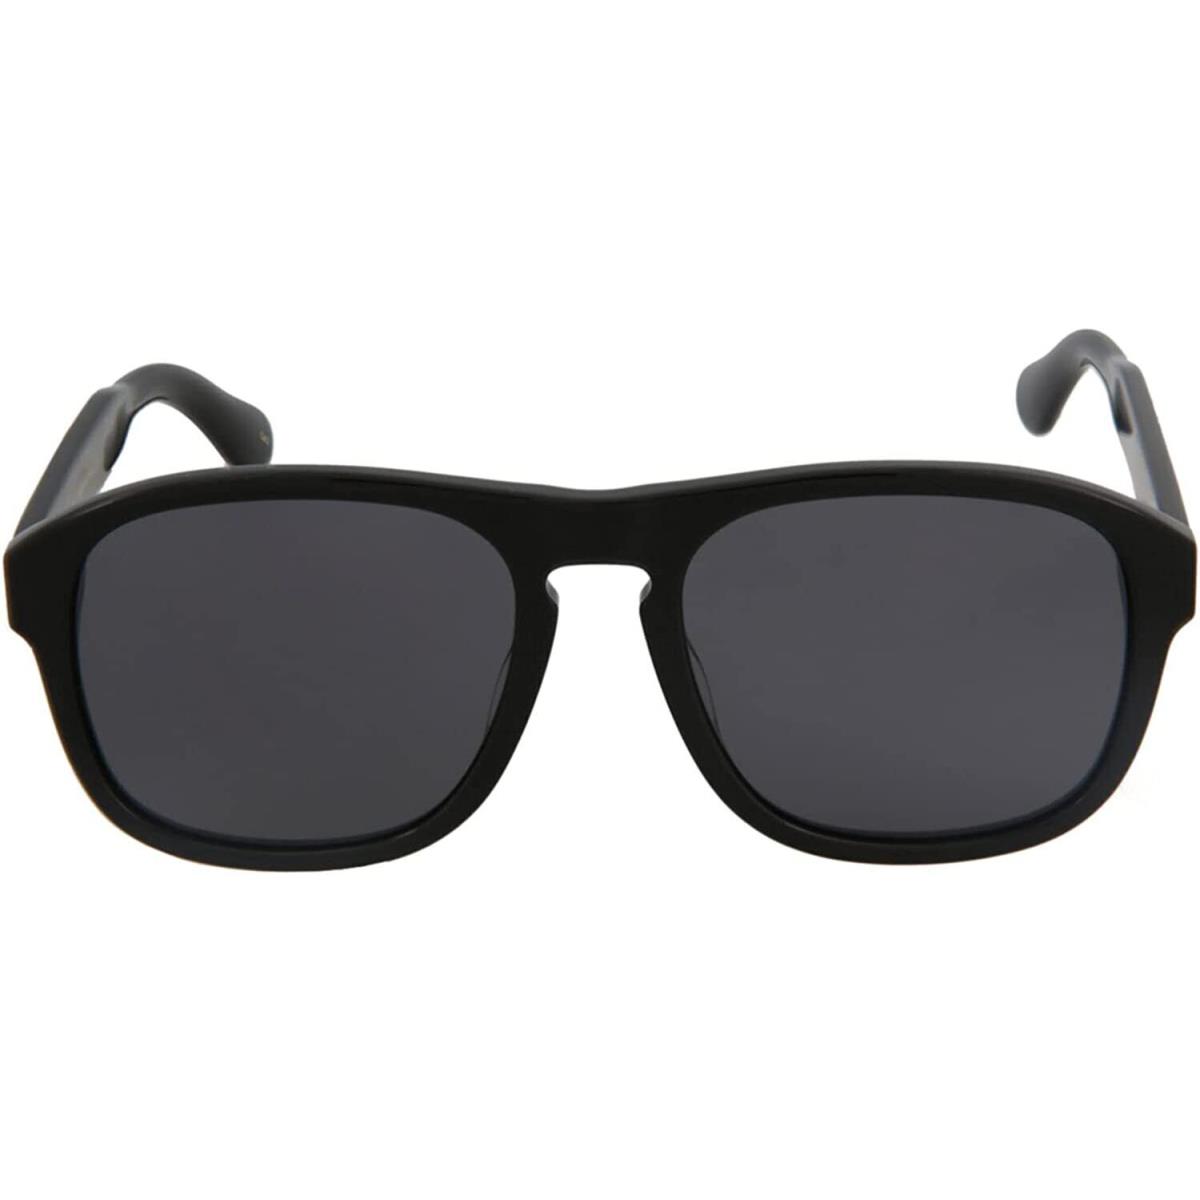 Gucci Sunglasses GG0583S 001 55mm Black / Grey Lens